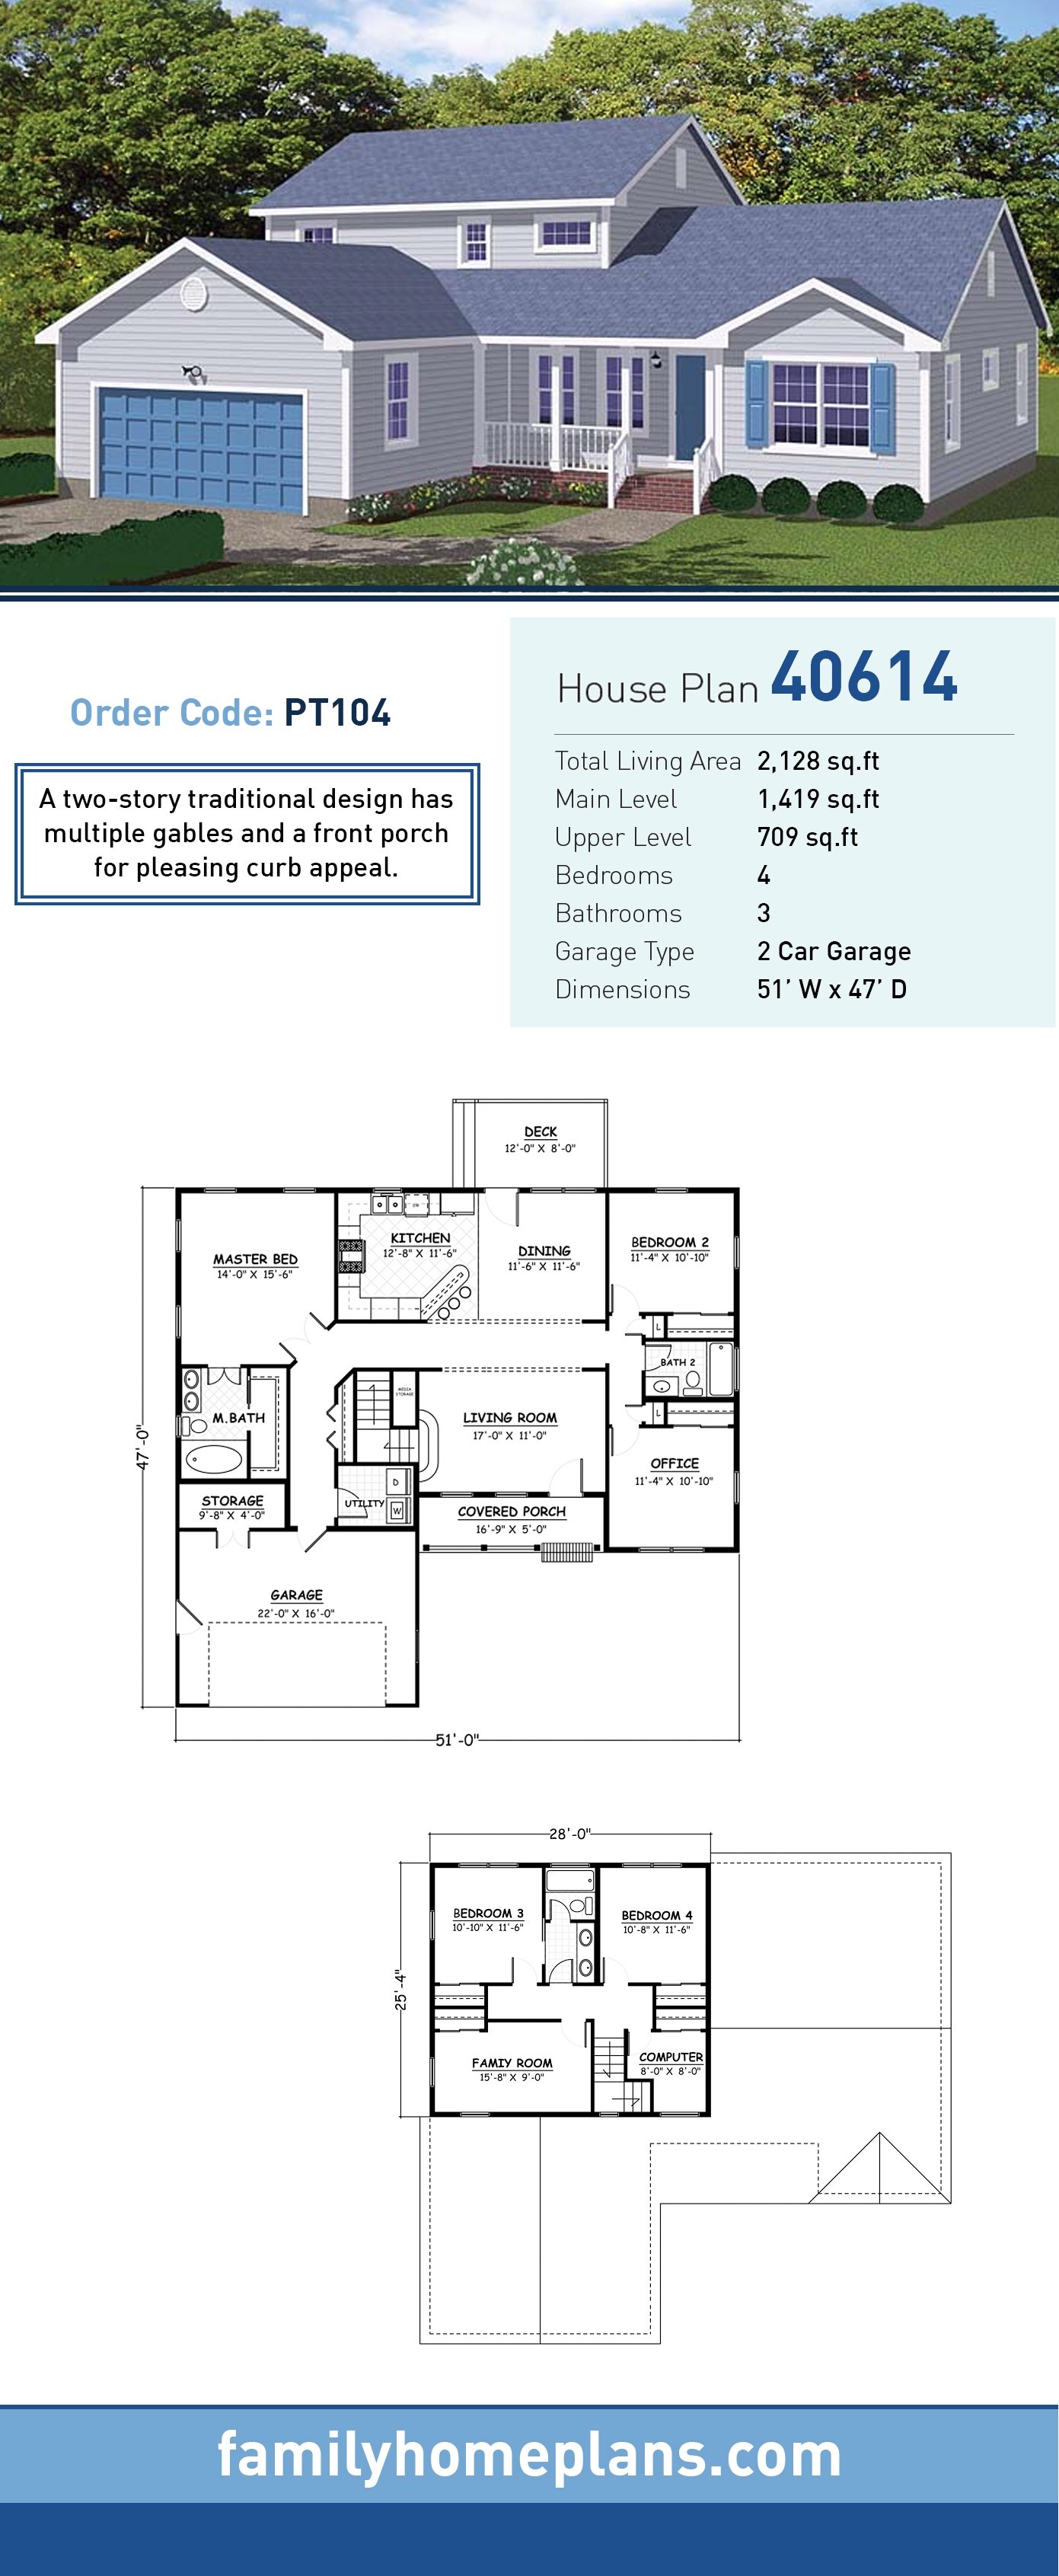 House Plan 40614